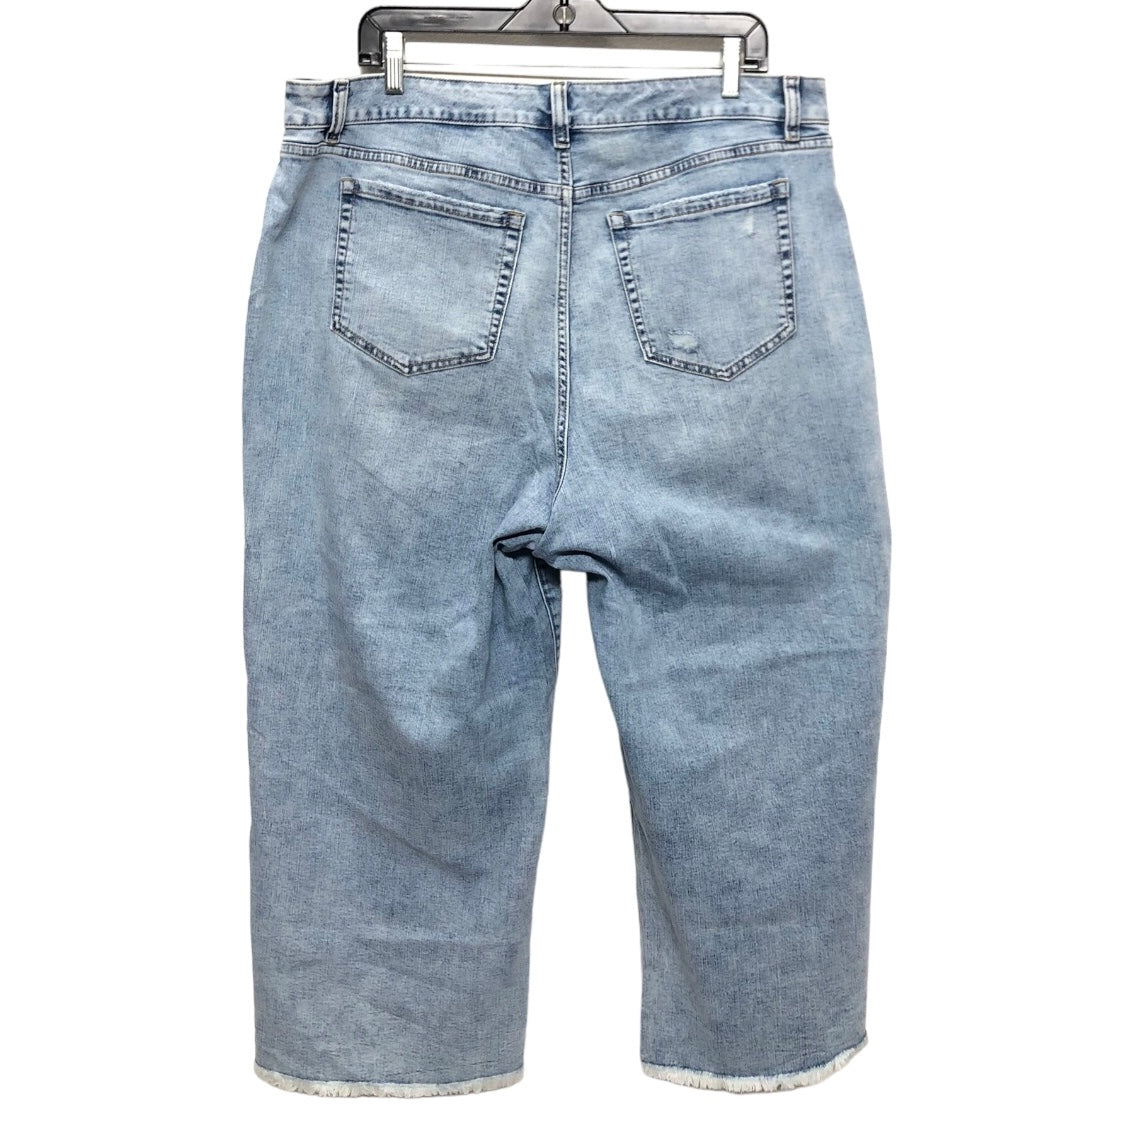 Blue Denim Jeans Cropped Lane Bryant, Size 16